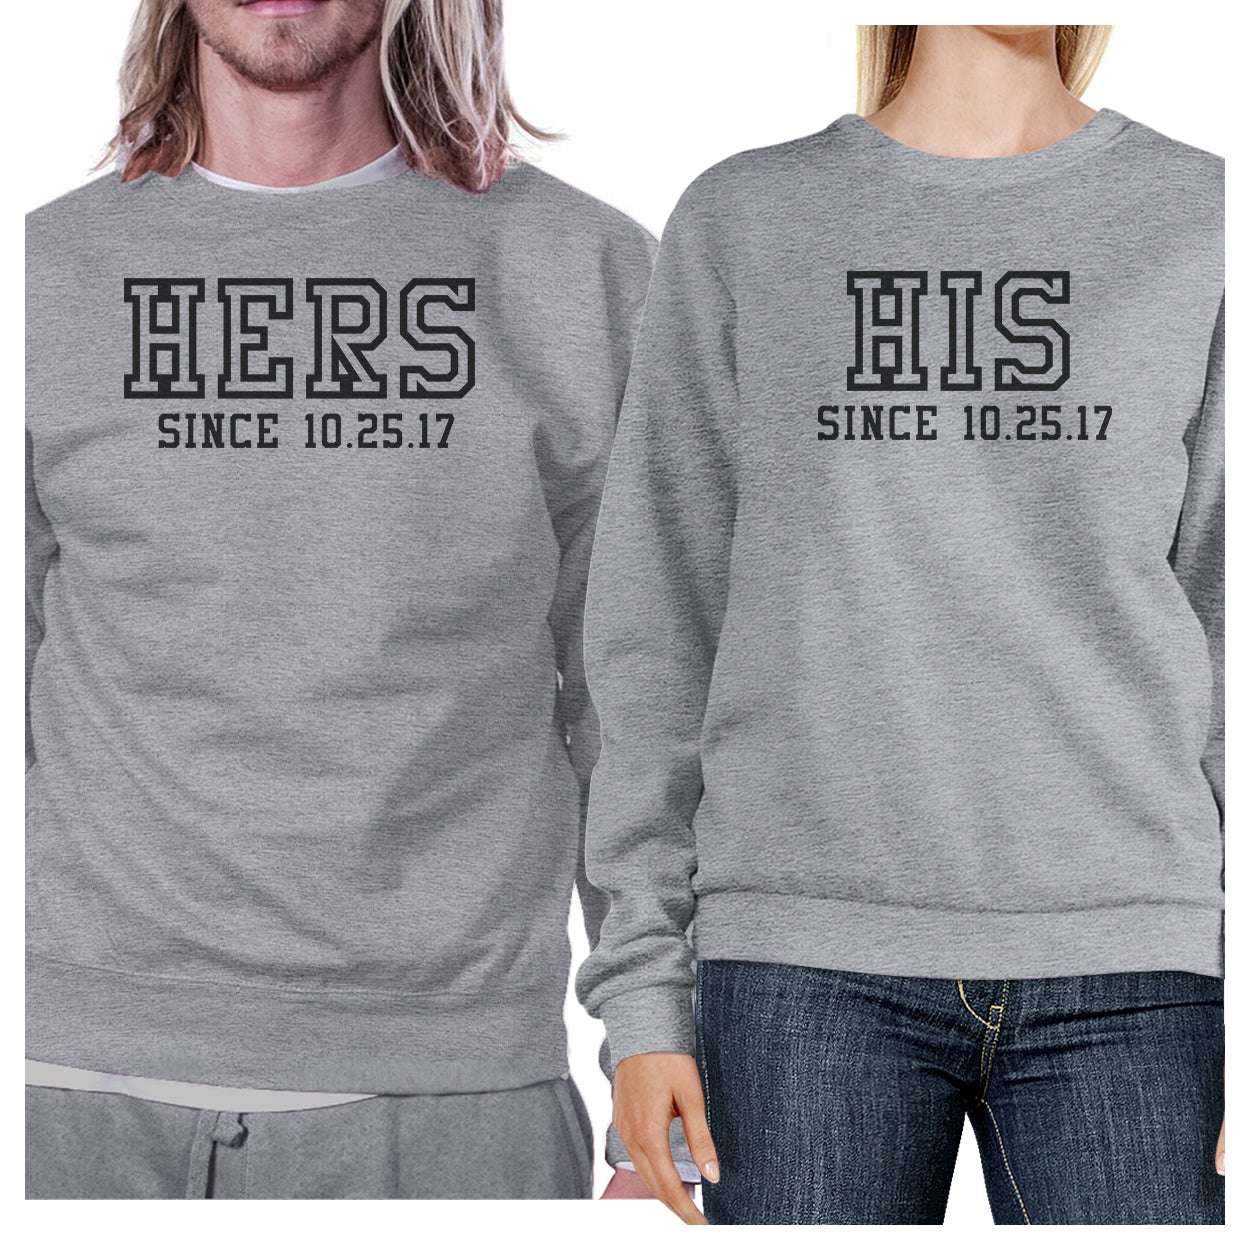 Hers And His Since Custom Matching Couple Grey Sweatshirts